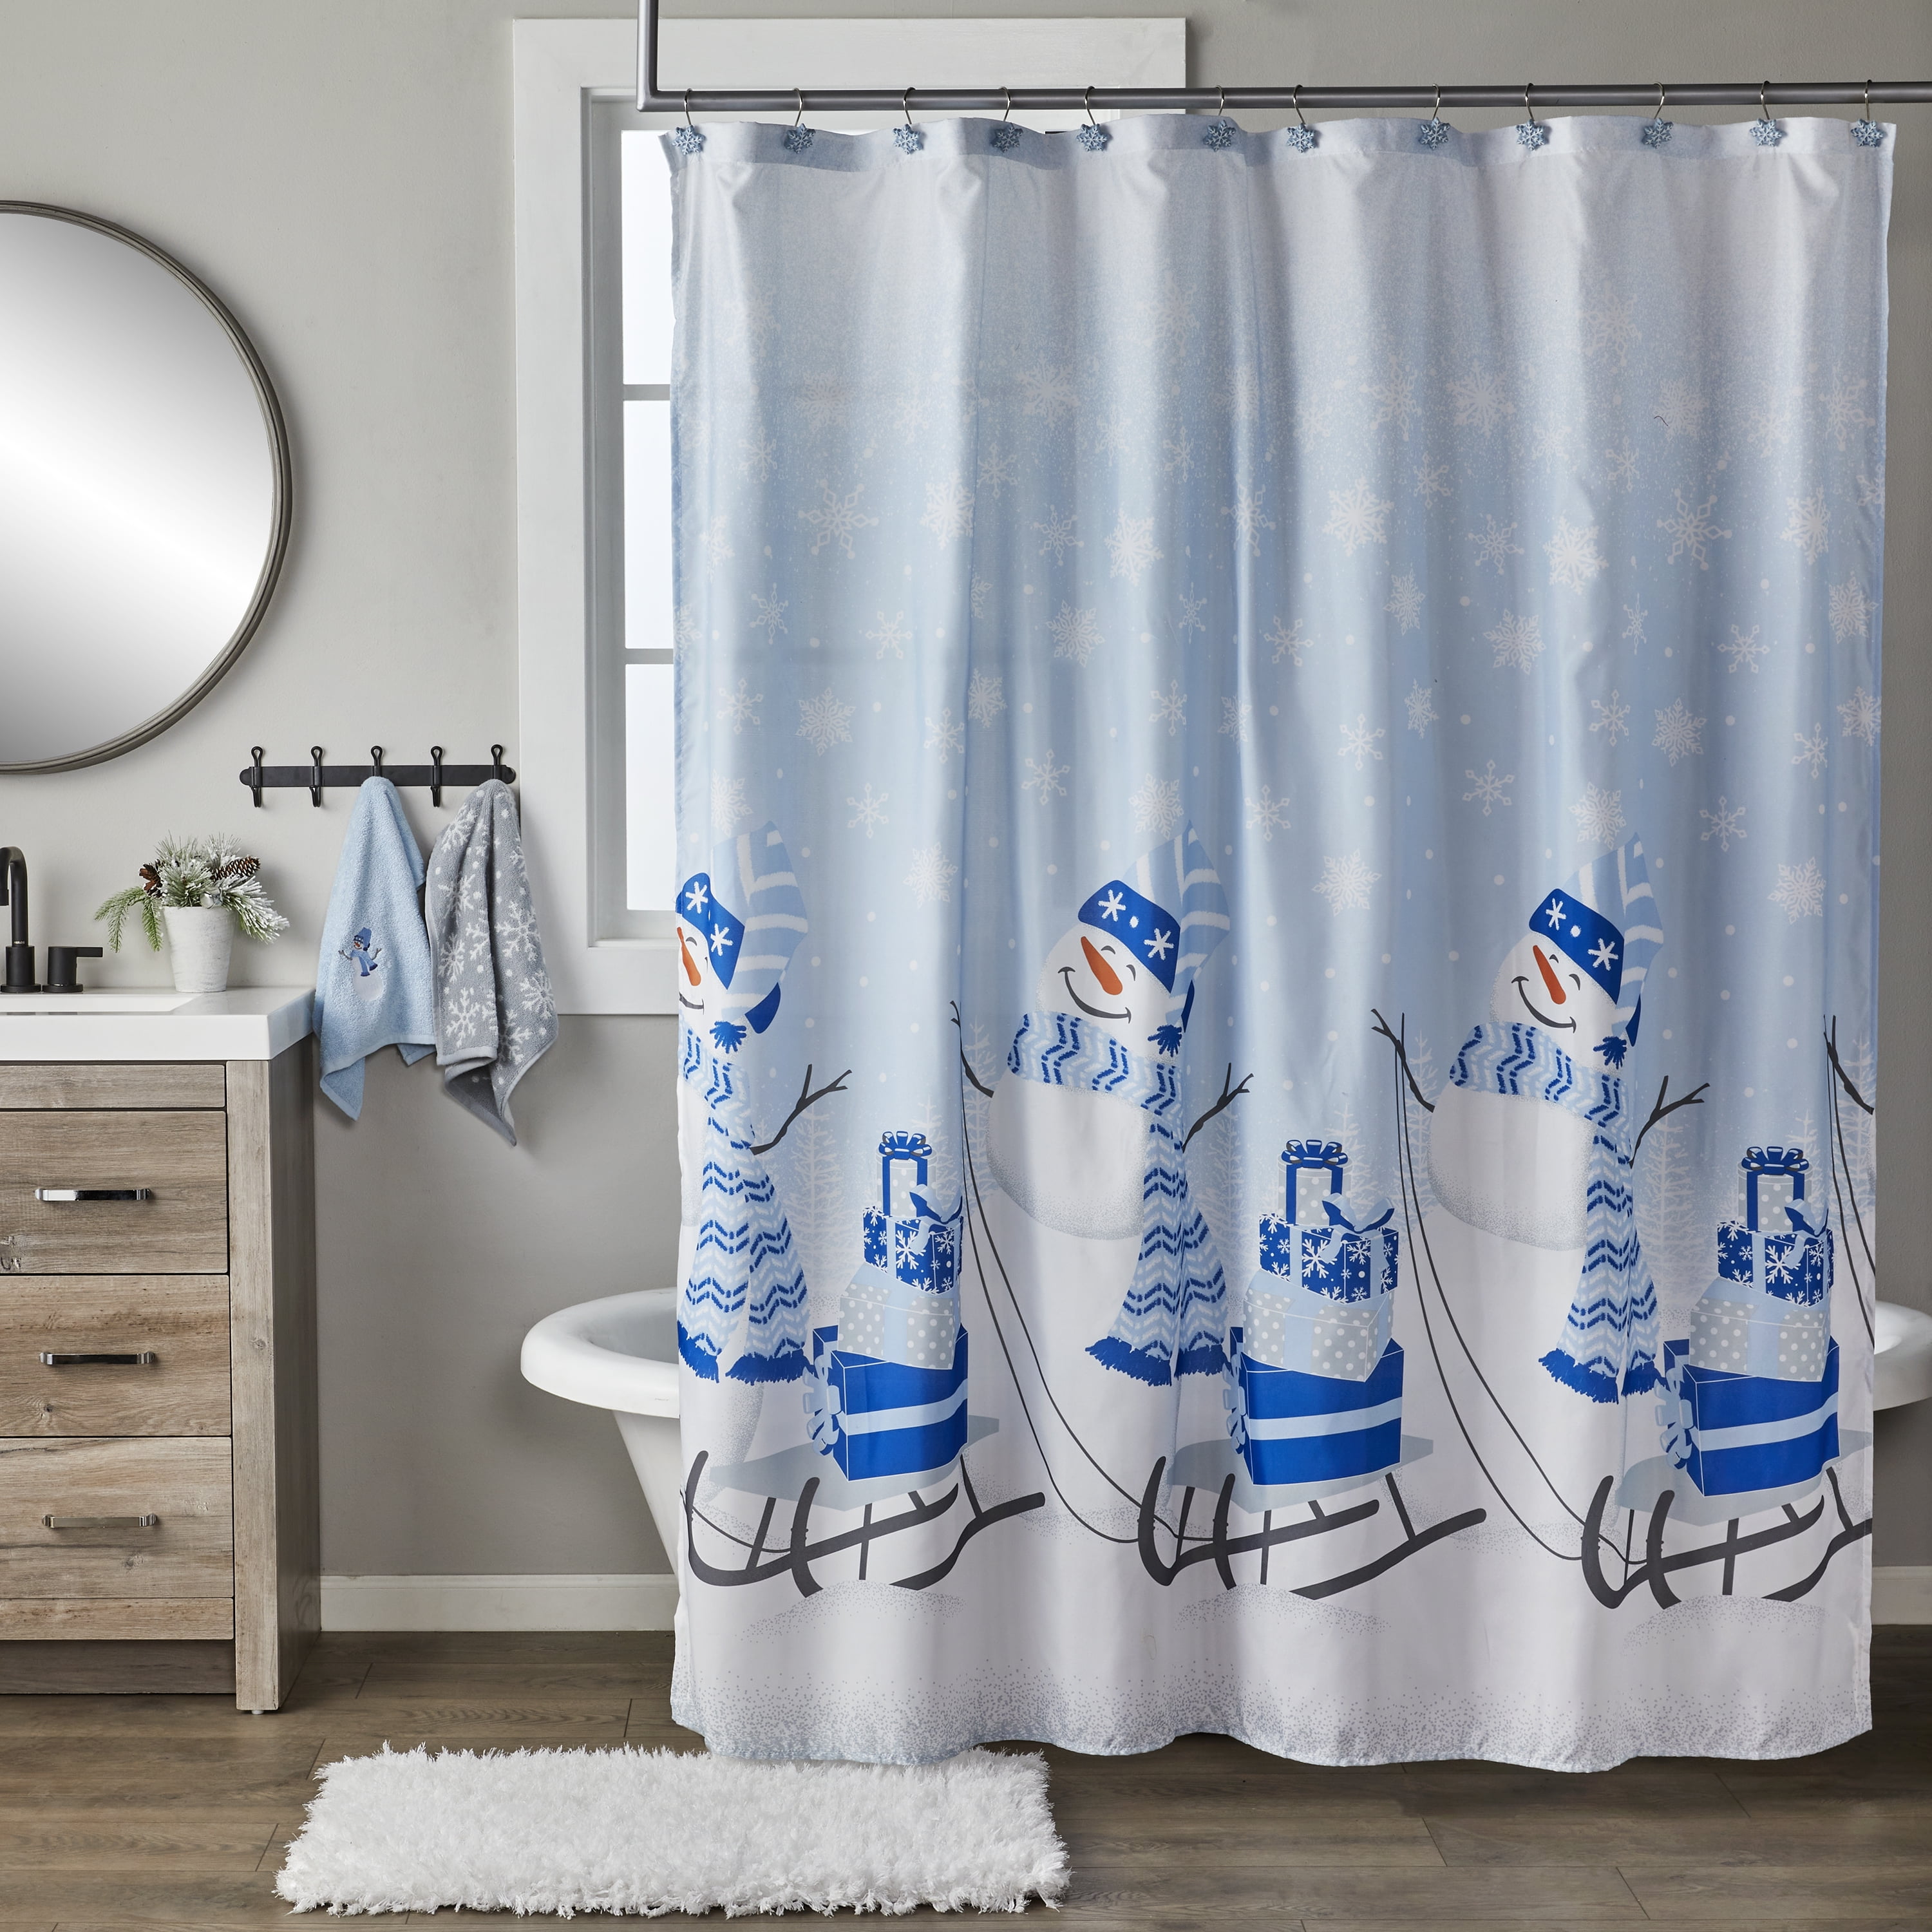 Hathor Temple and Galaxy Bathroom Polyester Fabric Shower Curtain Set 71inch 